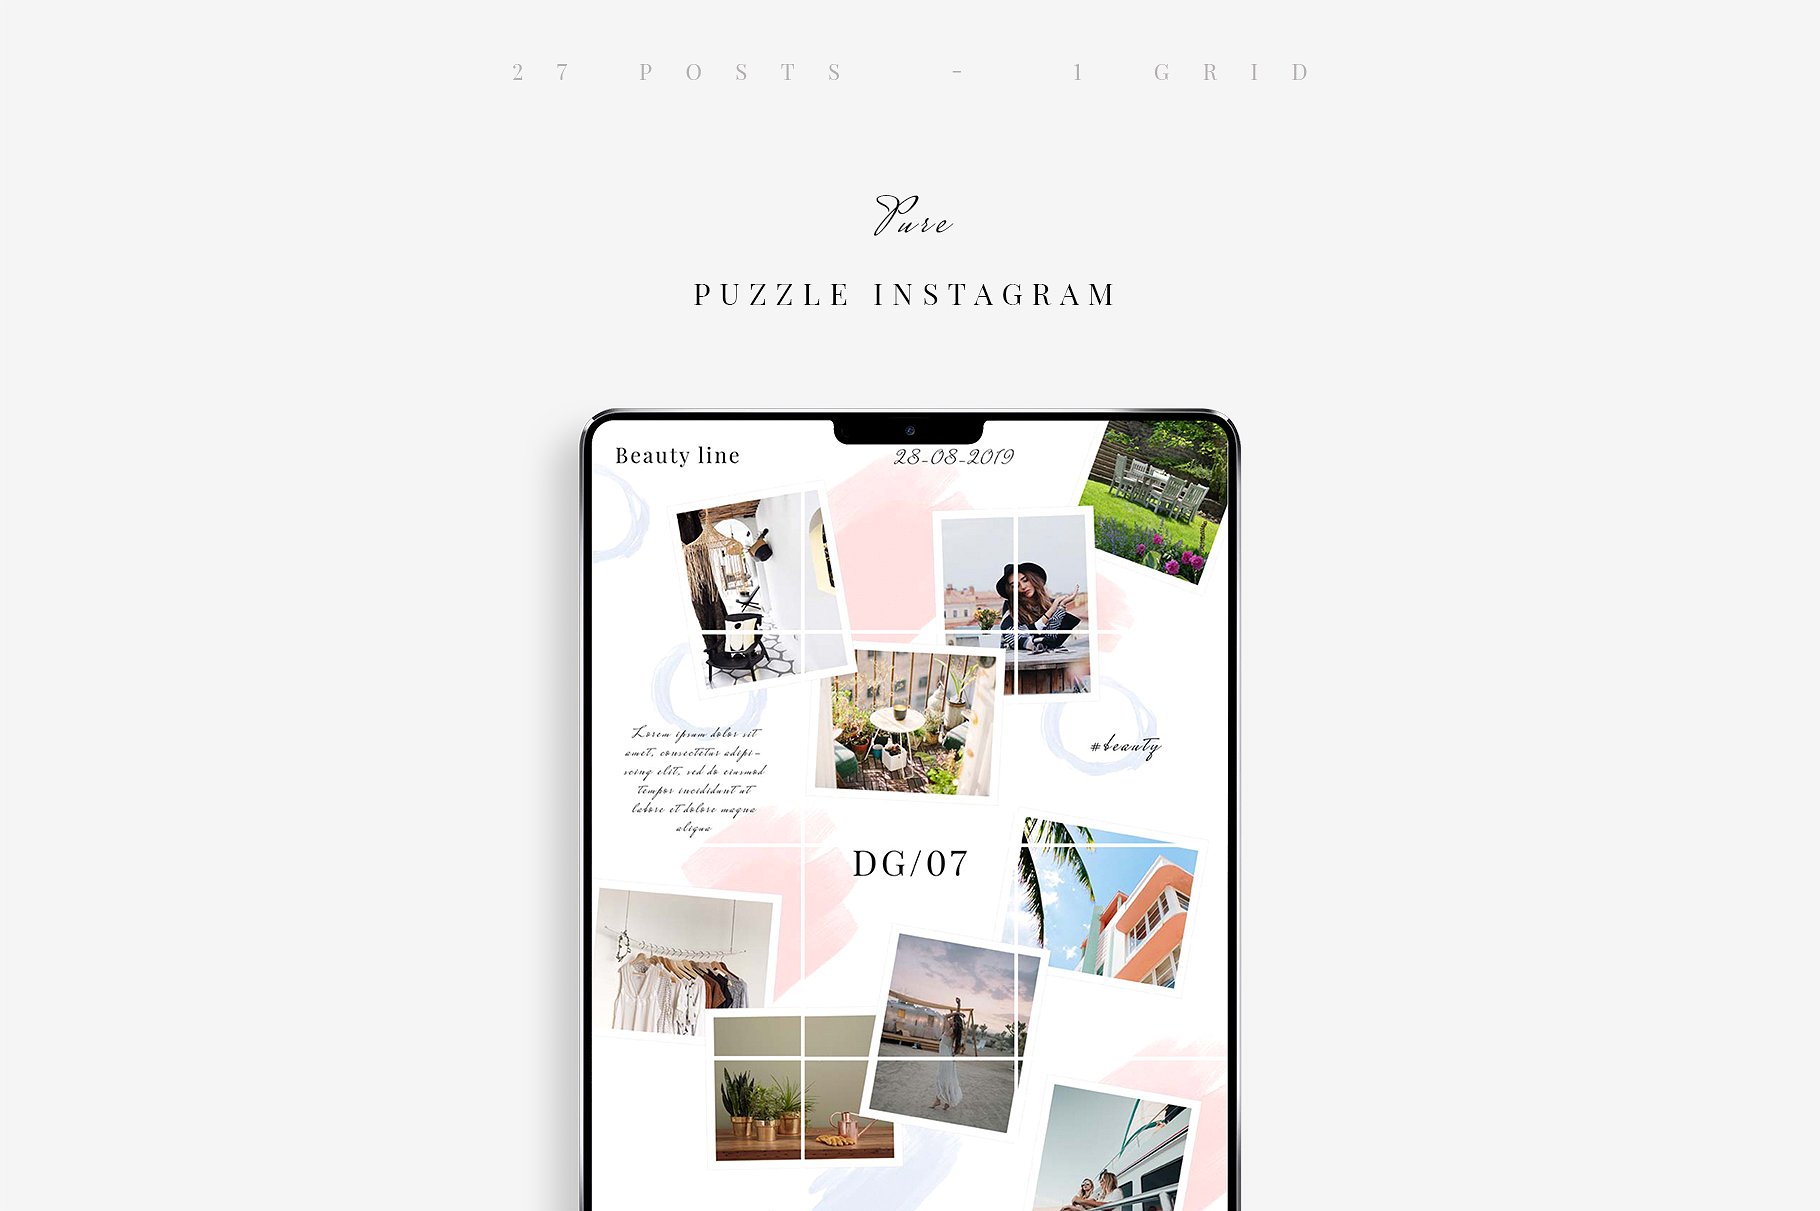 Instagram创意拼贴图片模板蚂蚁素材精选 Pure Puzzle Instagram插图